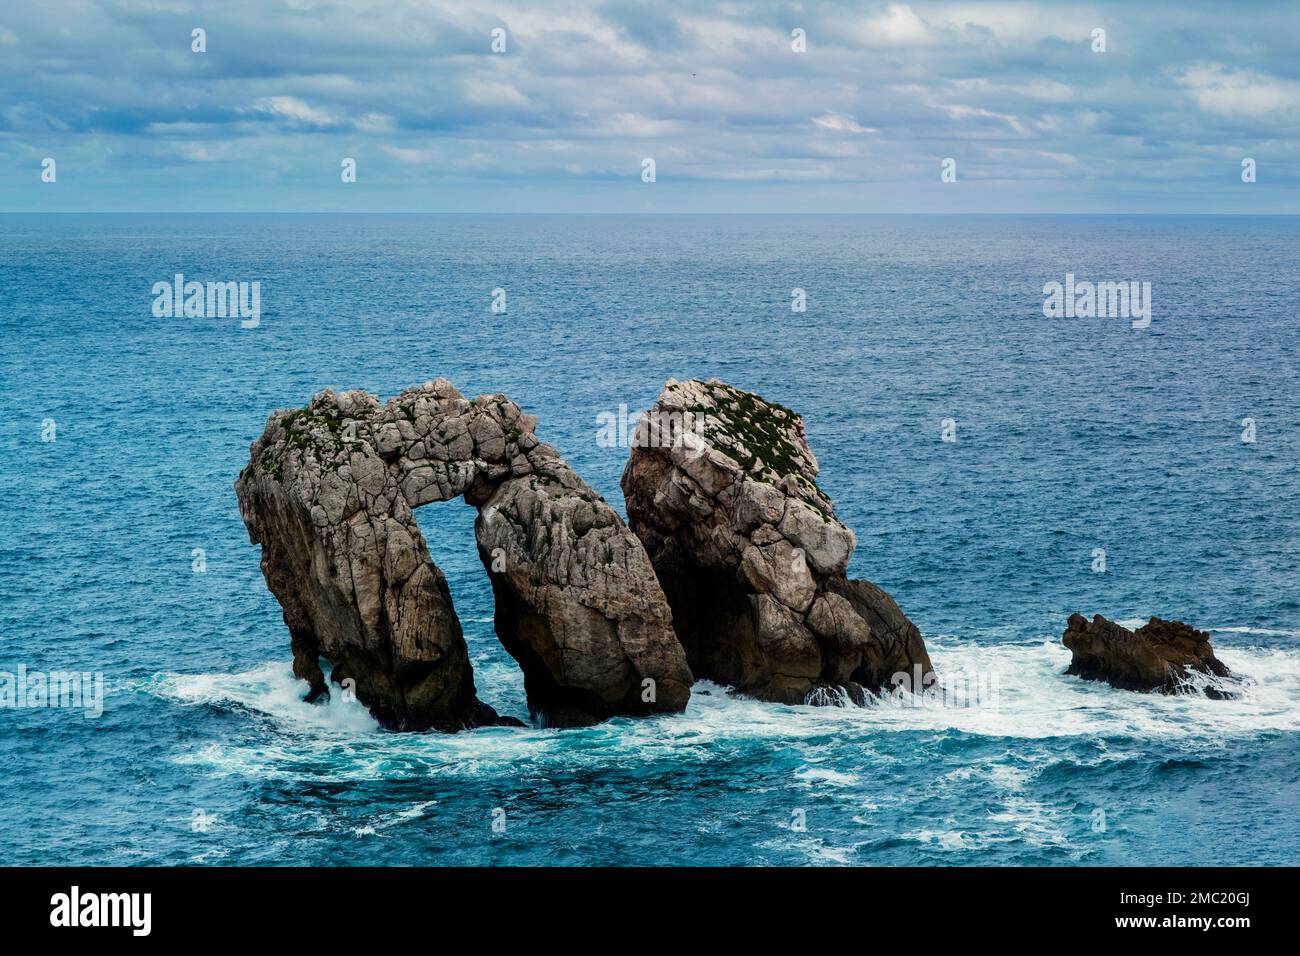 Sea gate O Canto del Diablo in the Broken Coast (Costa Quebrada), Cantabria, Spain Stock Photo